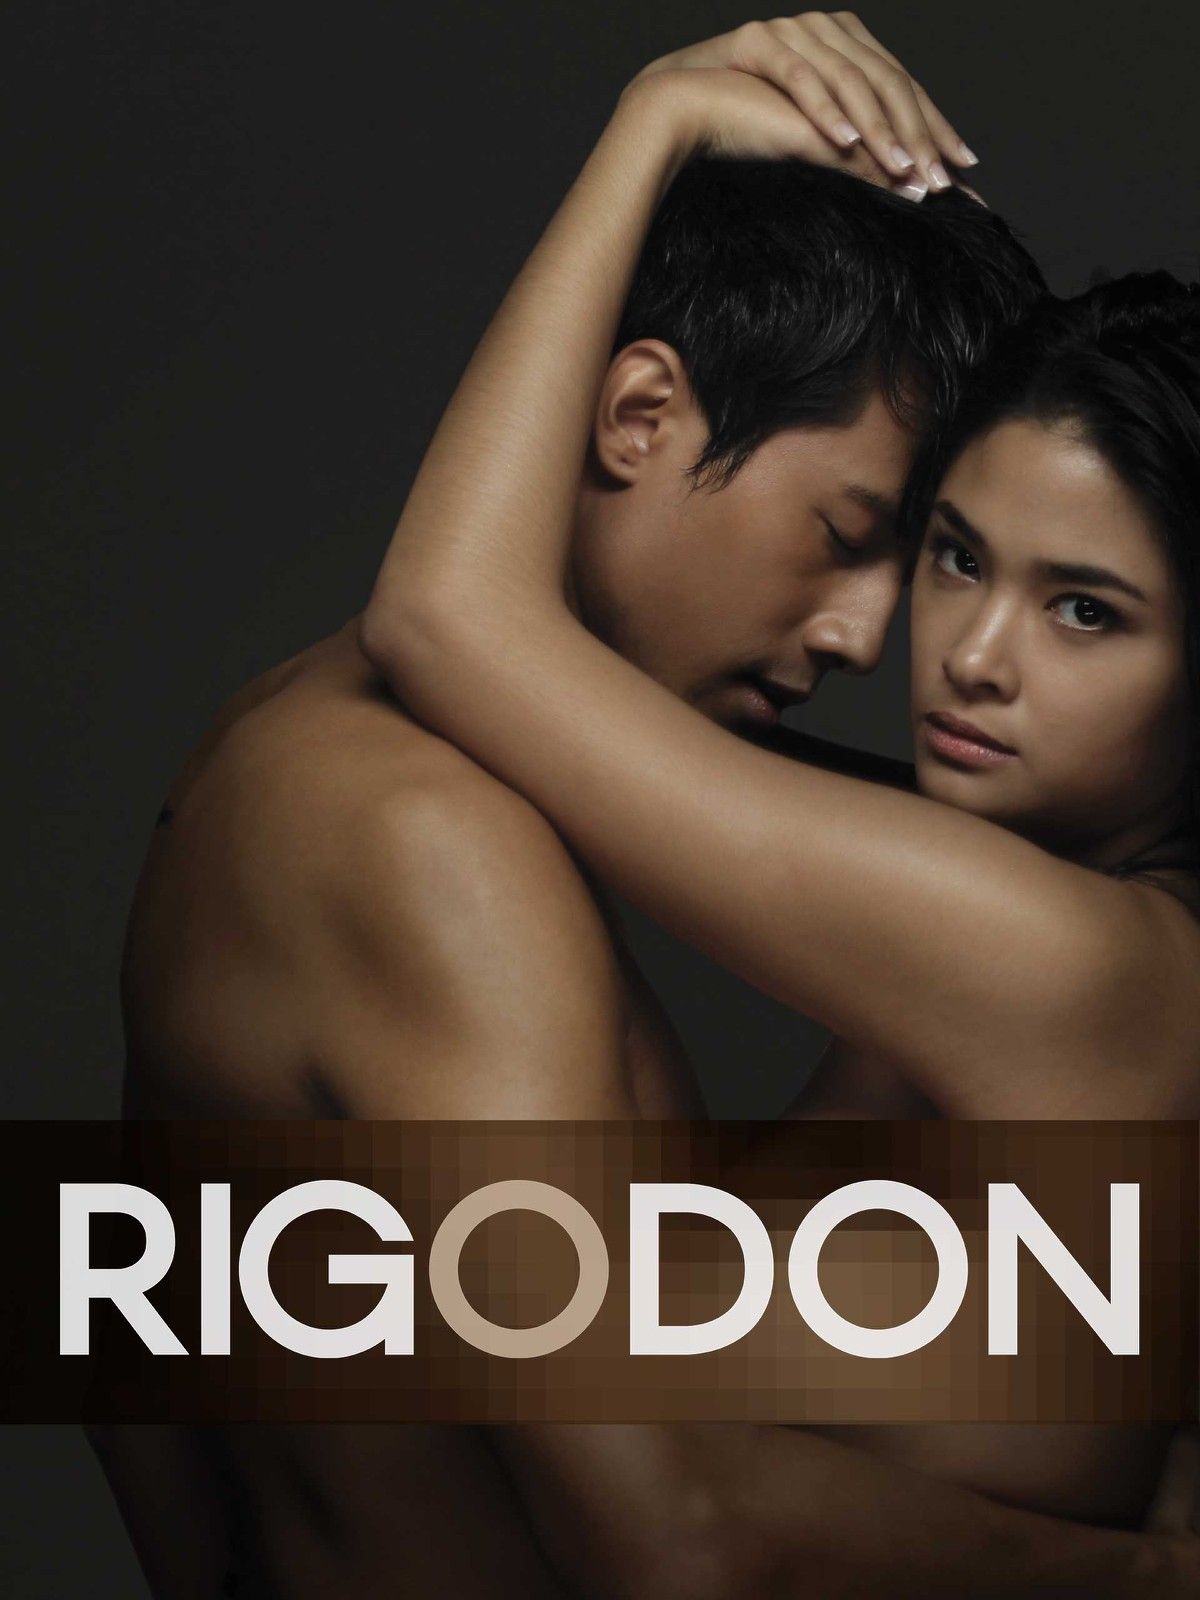 [18＋] Rigodon (2012) UNRATED Filipino Movie download full movie